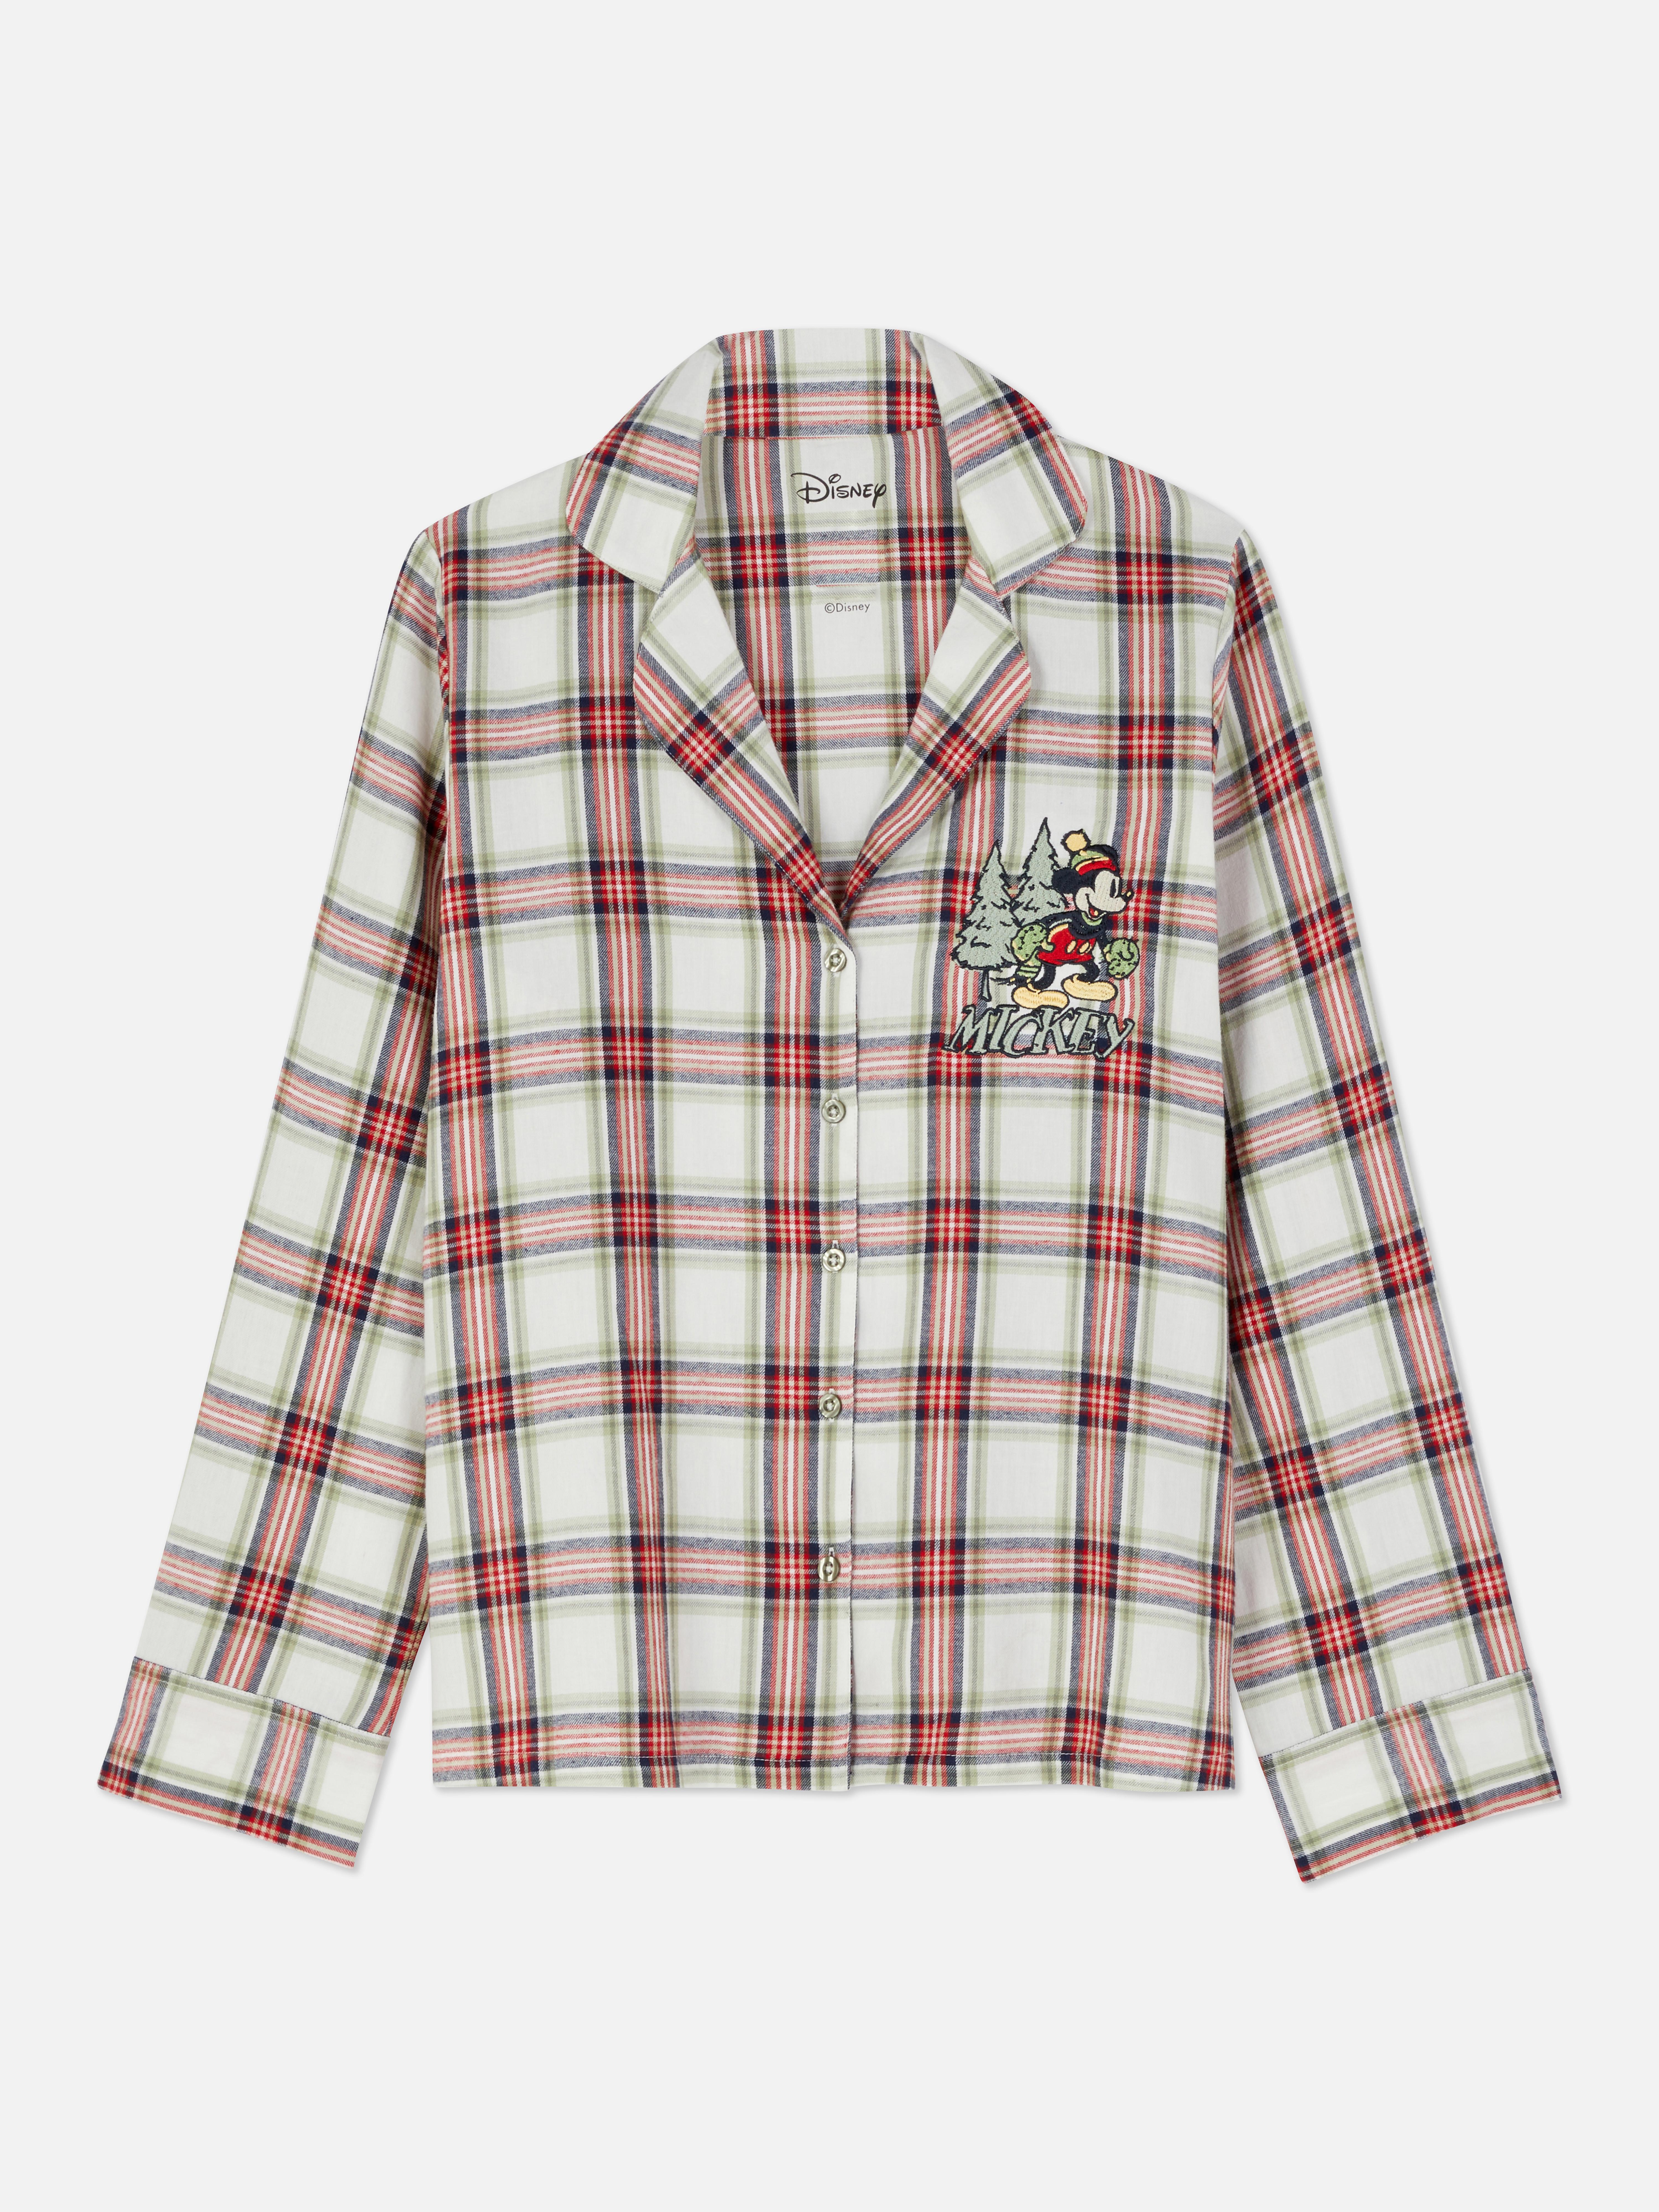 Disney’s Mickey Mouse Check Print Cotton Pyjama Top